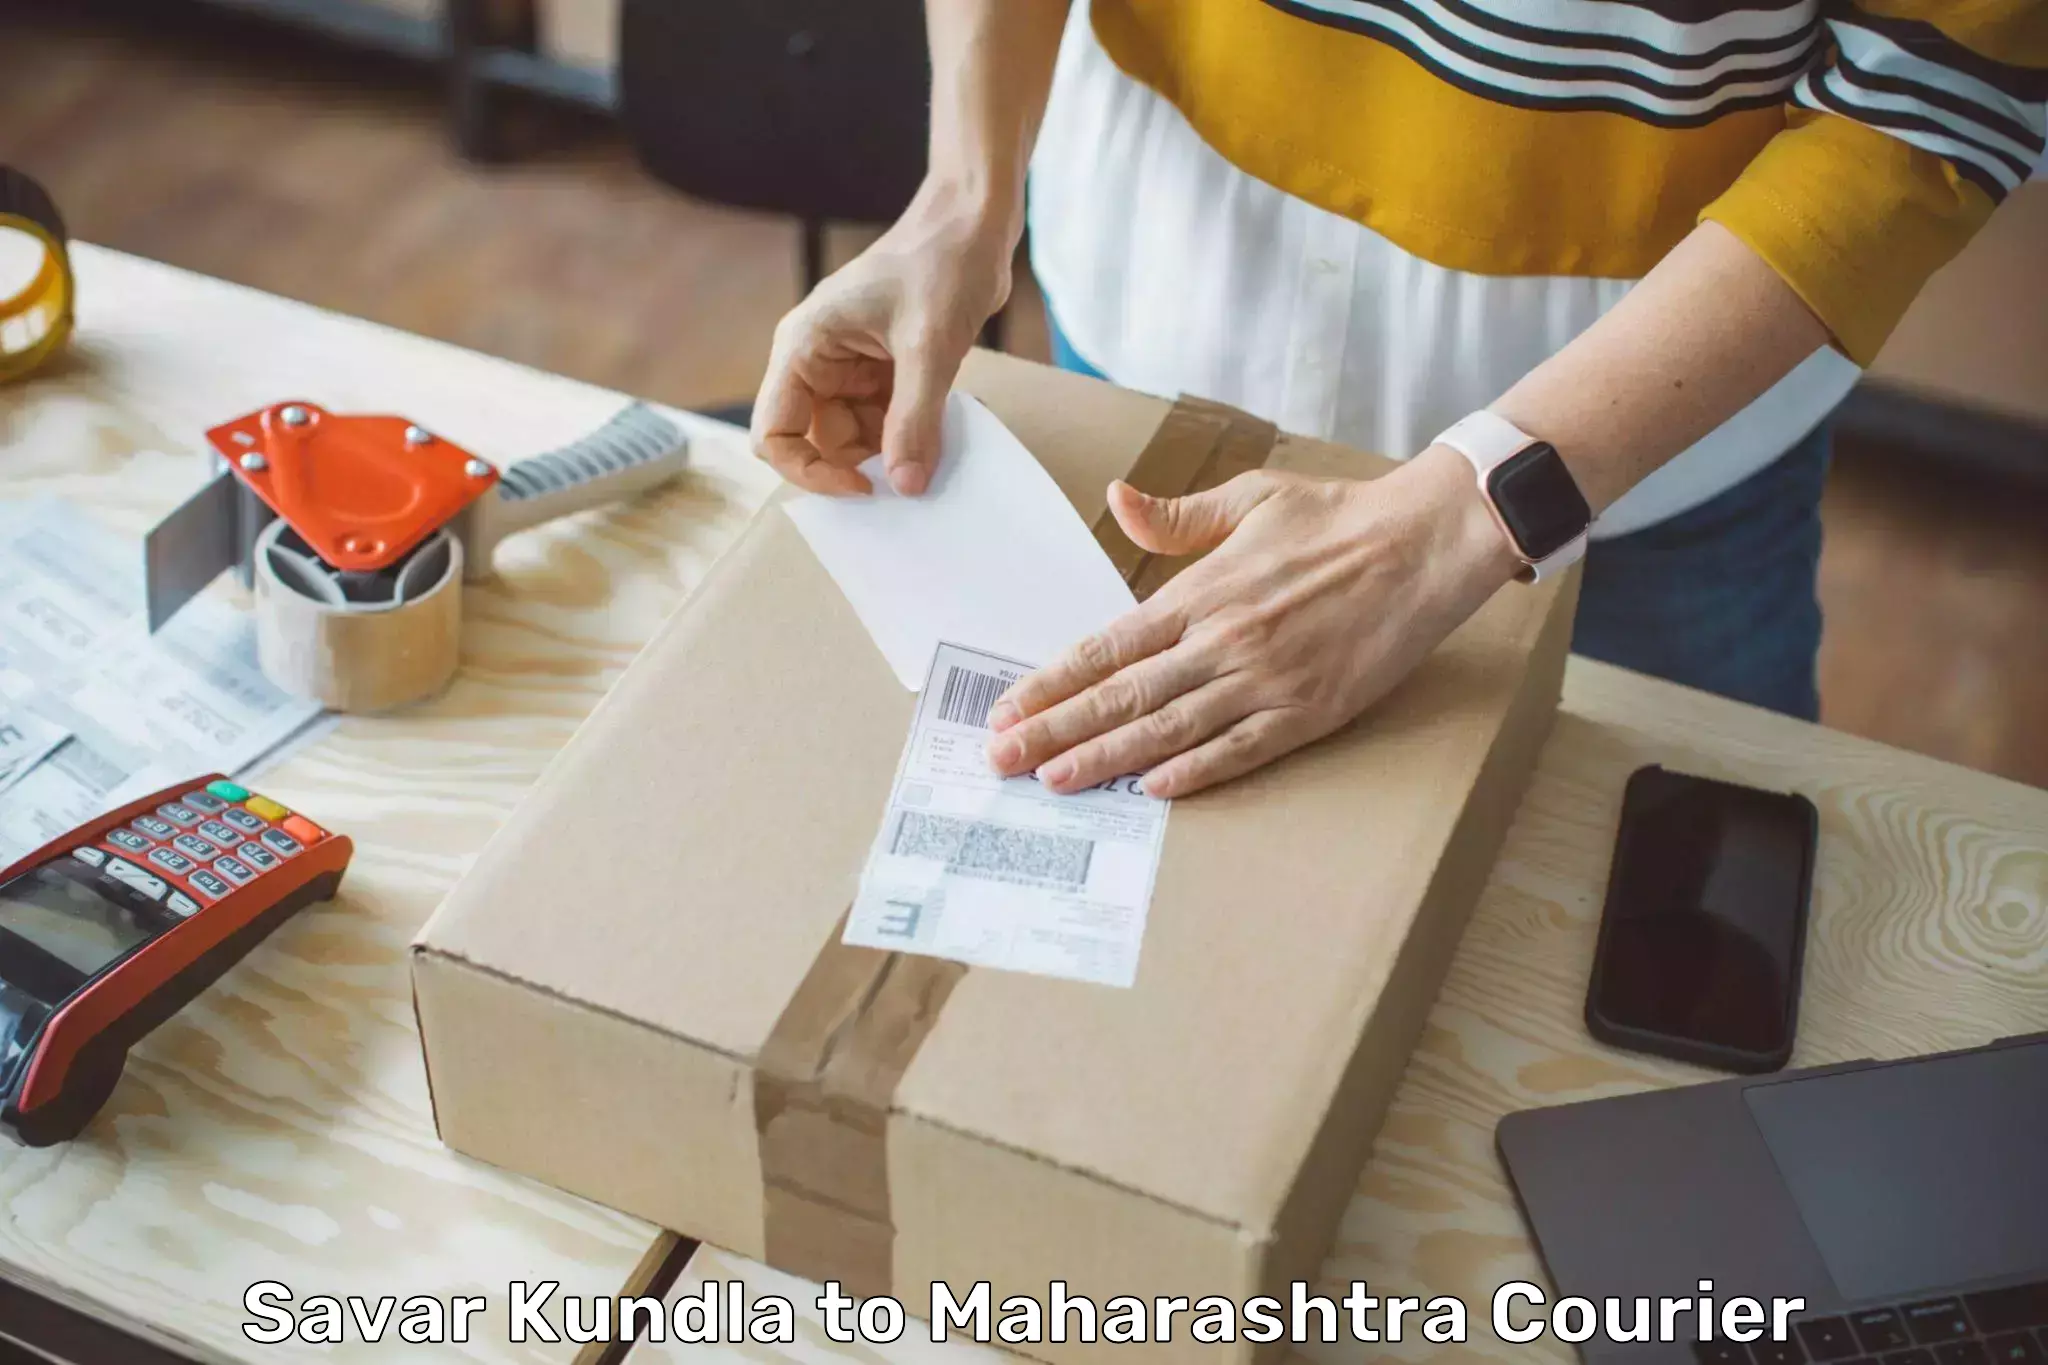 Premium courier solutions Savar Kundla to Maharashtra